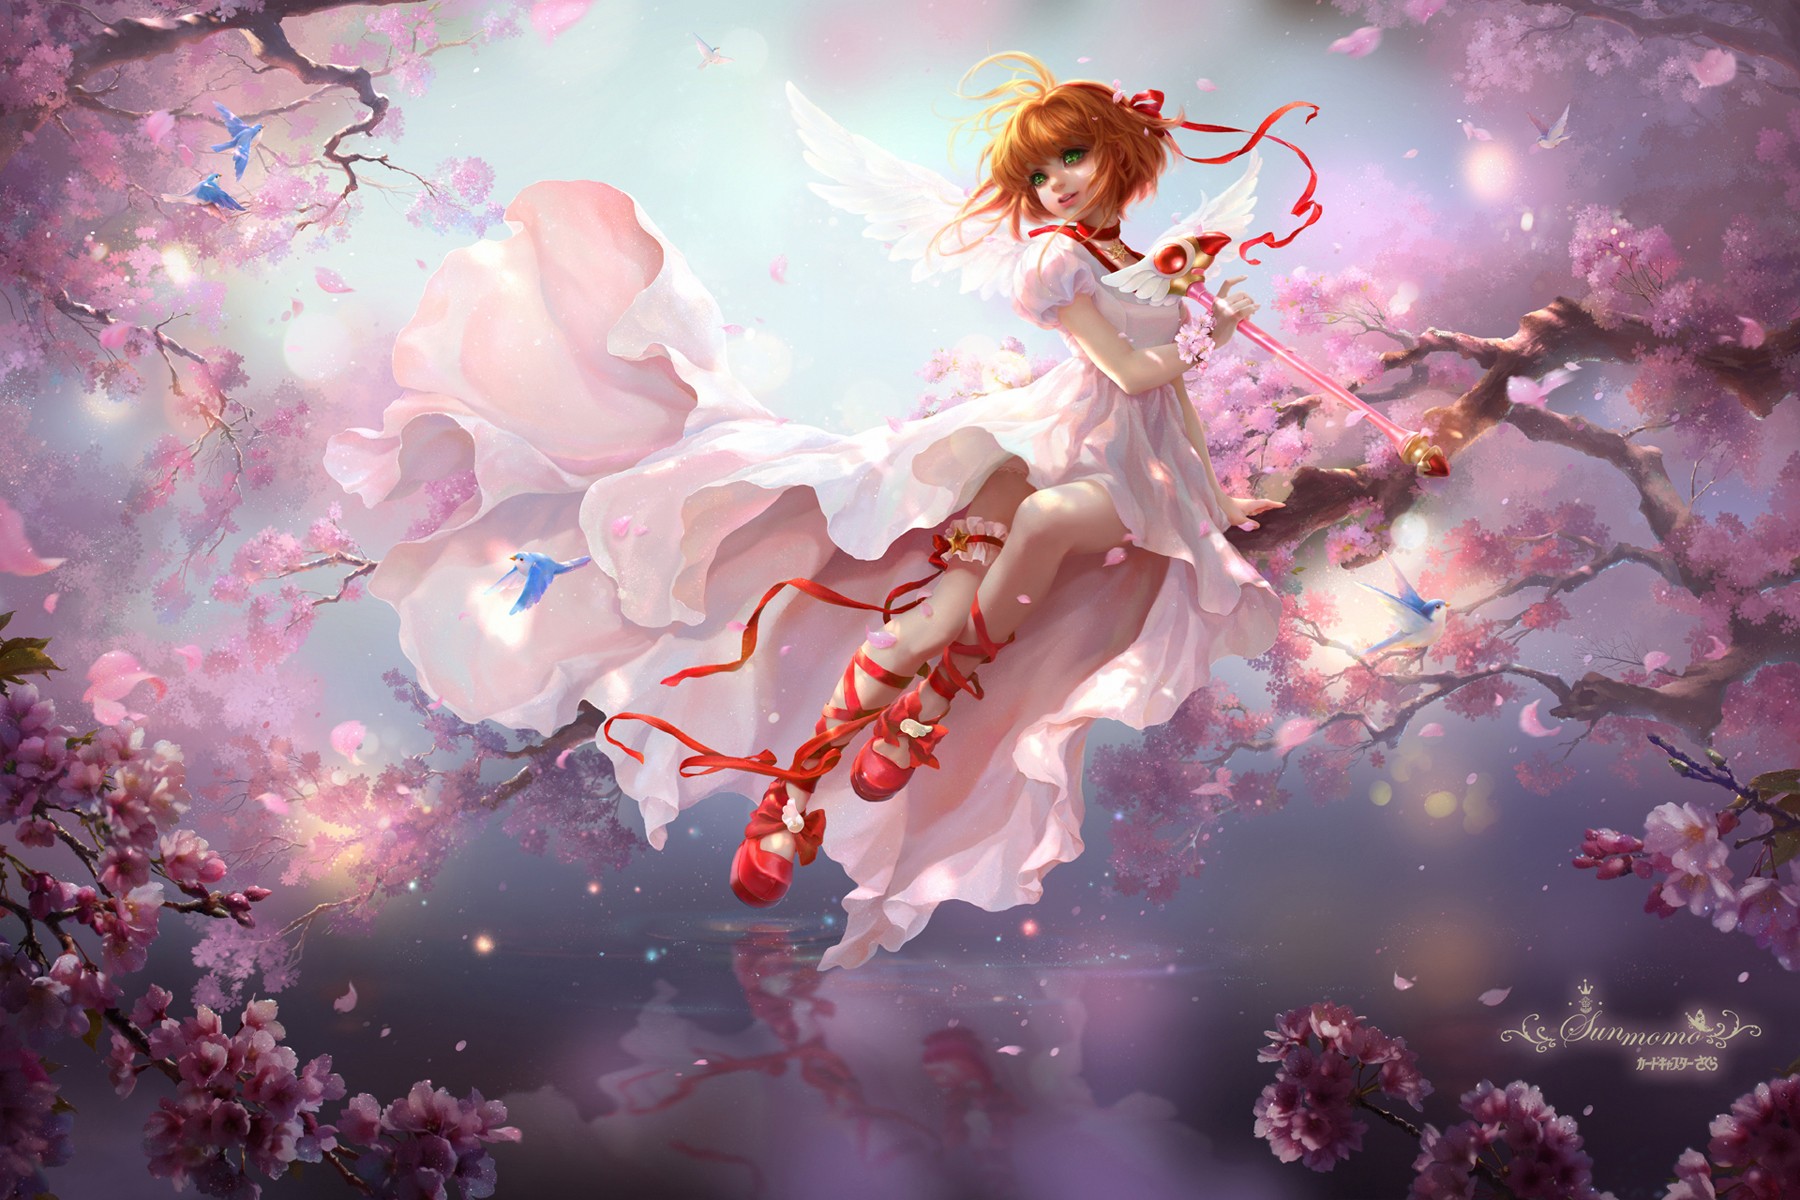 Anime 1800x1200 anime anime girls Cardcaptor Sakura Kinomoto Sakura dress weapon wings short hair green eyes legs ArtStation fantasy art fantasy girl redhead flowers plants sky